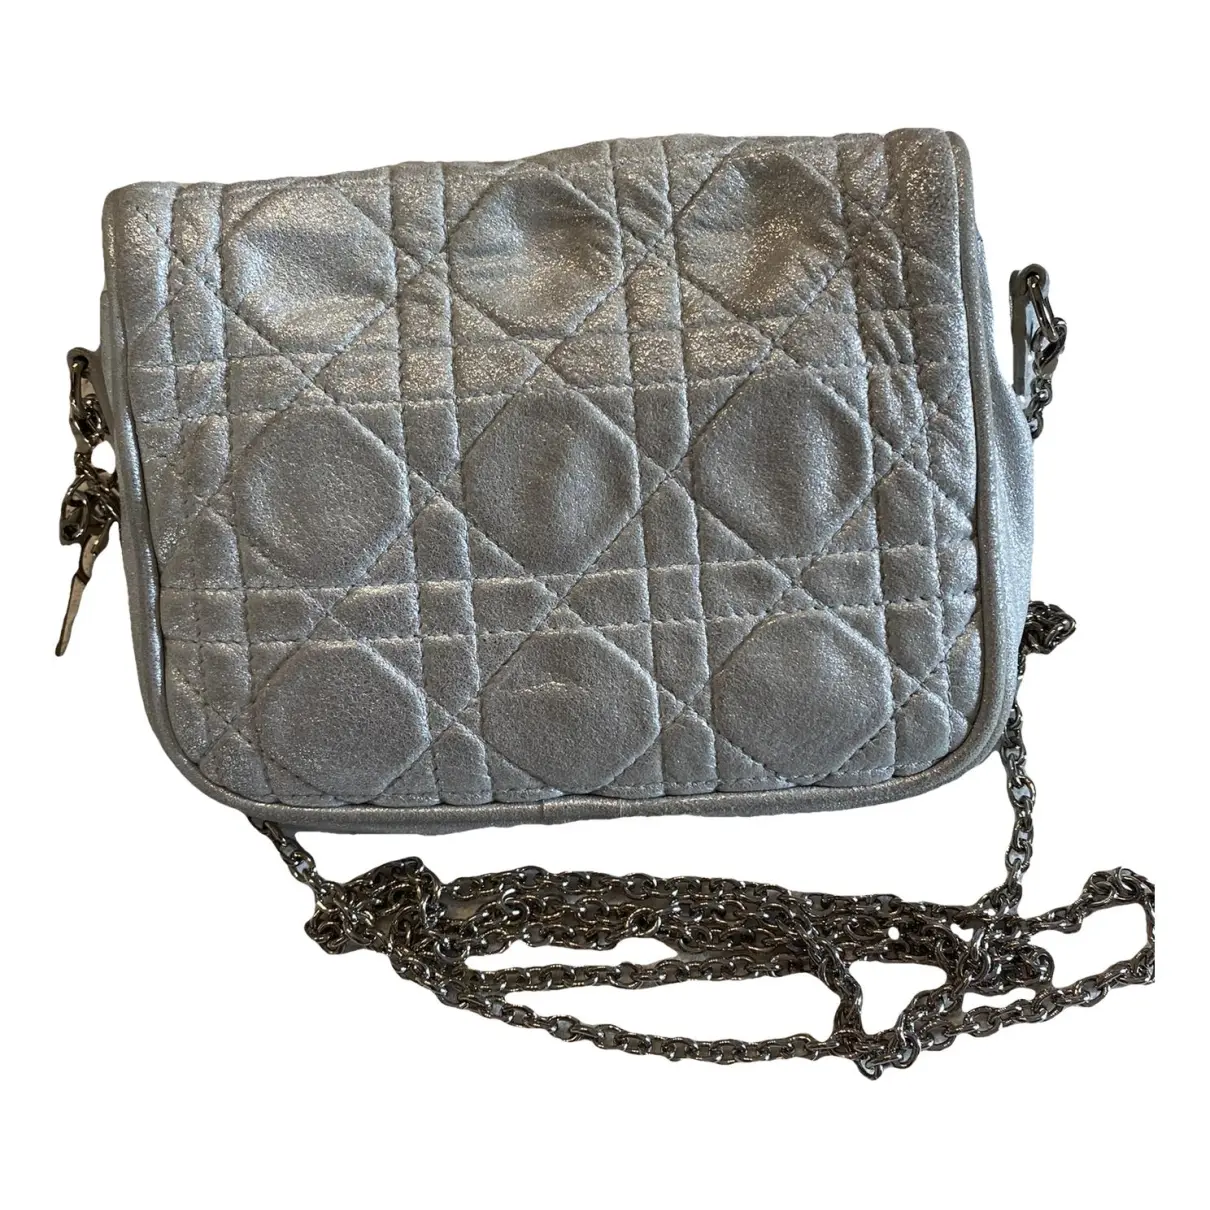 Miss Dior leather clutch bag